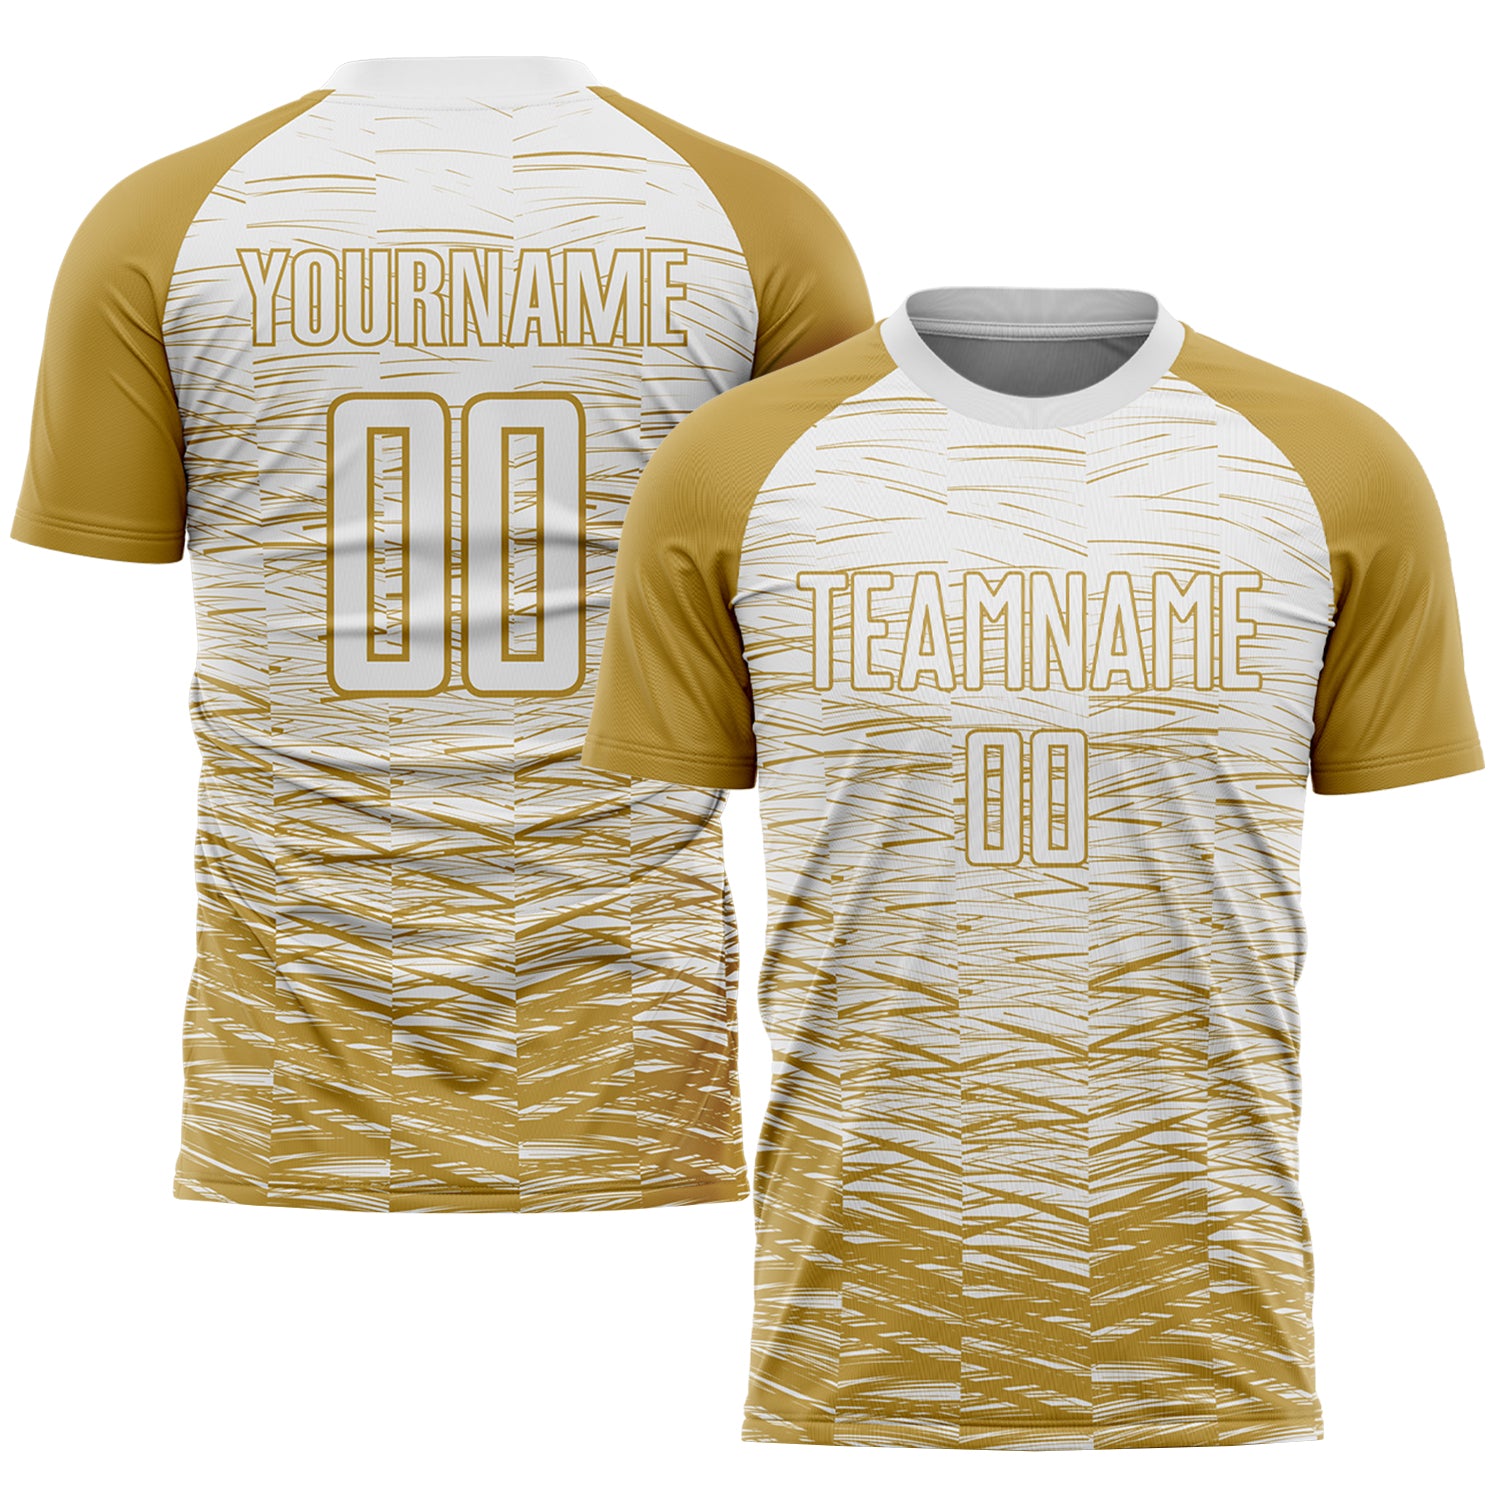 FANSIDEA Custom Graffiti Pattern White Black Orange-Old Gold Sublimation Soccer Uniform Jersey Women's Size:2XL